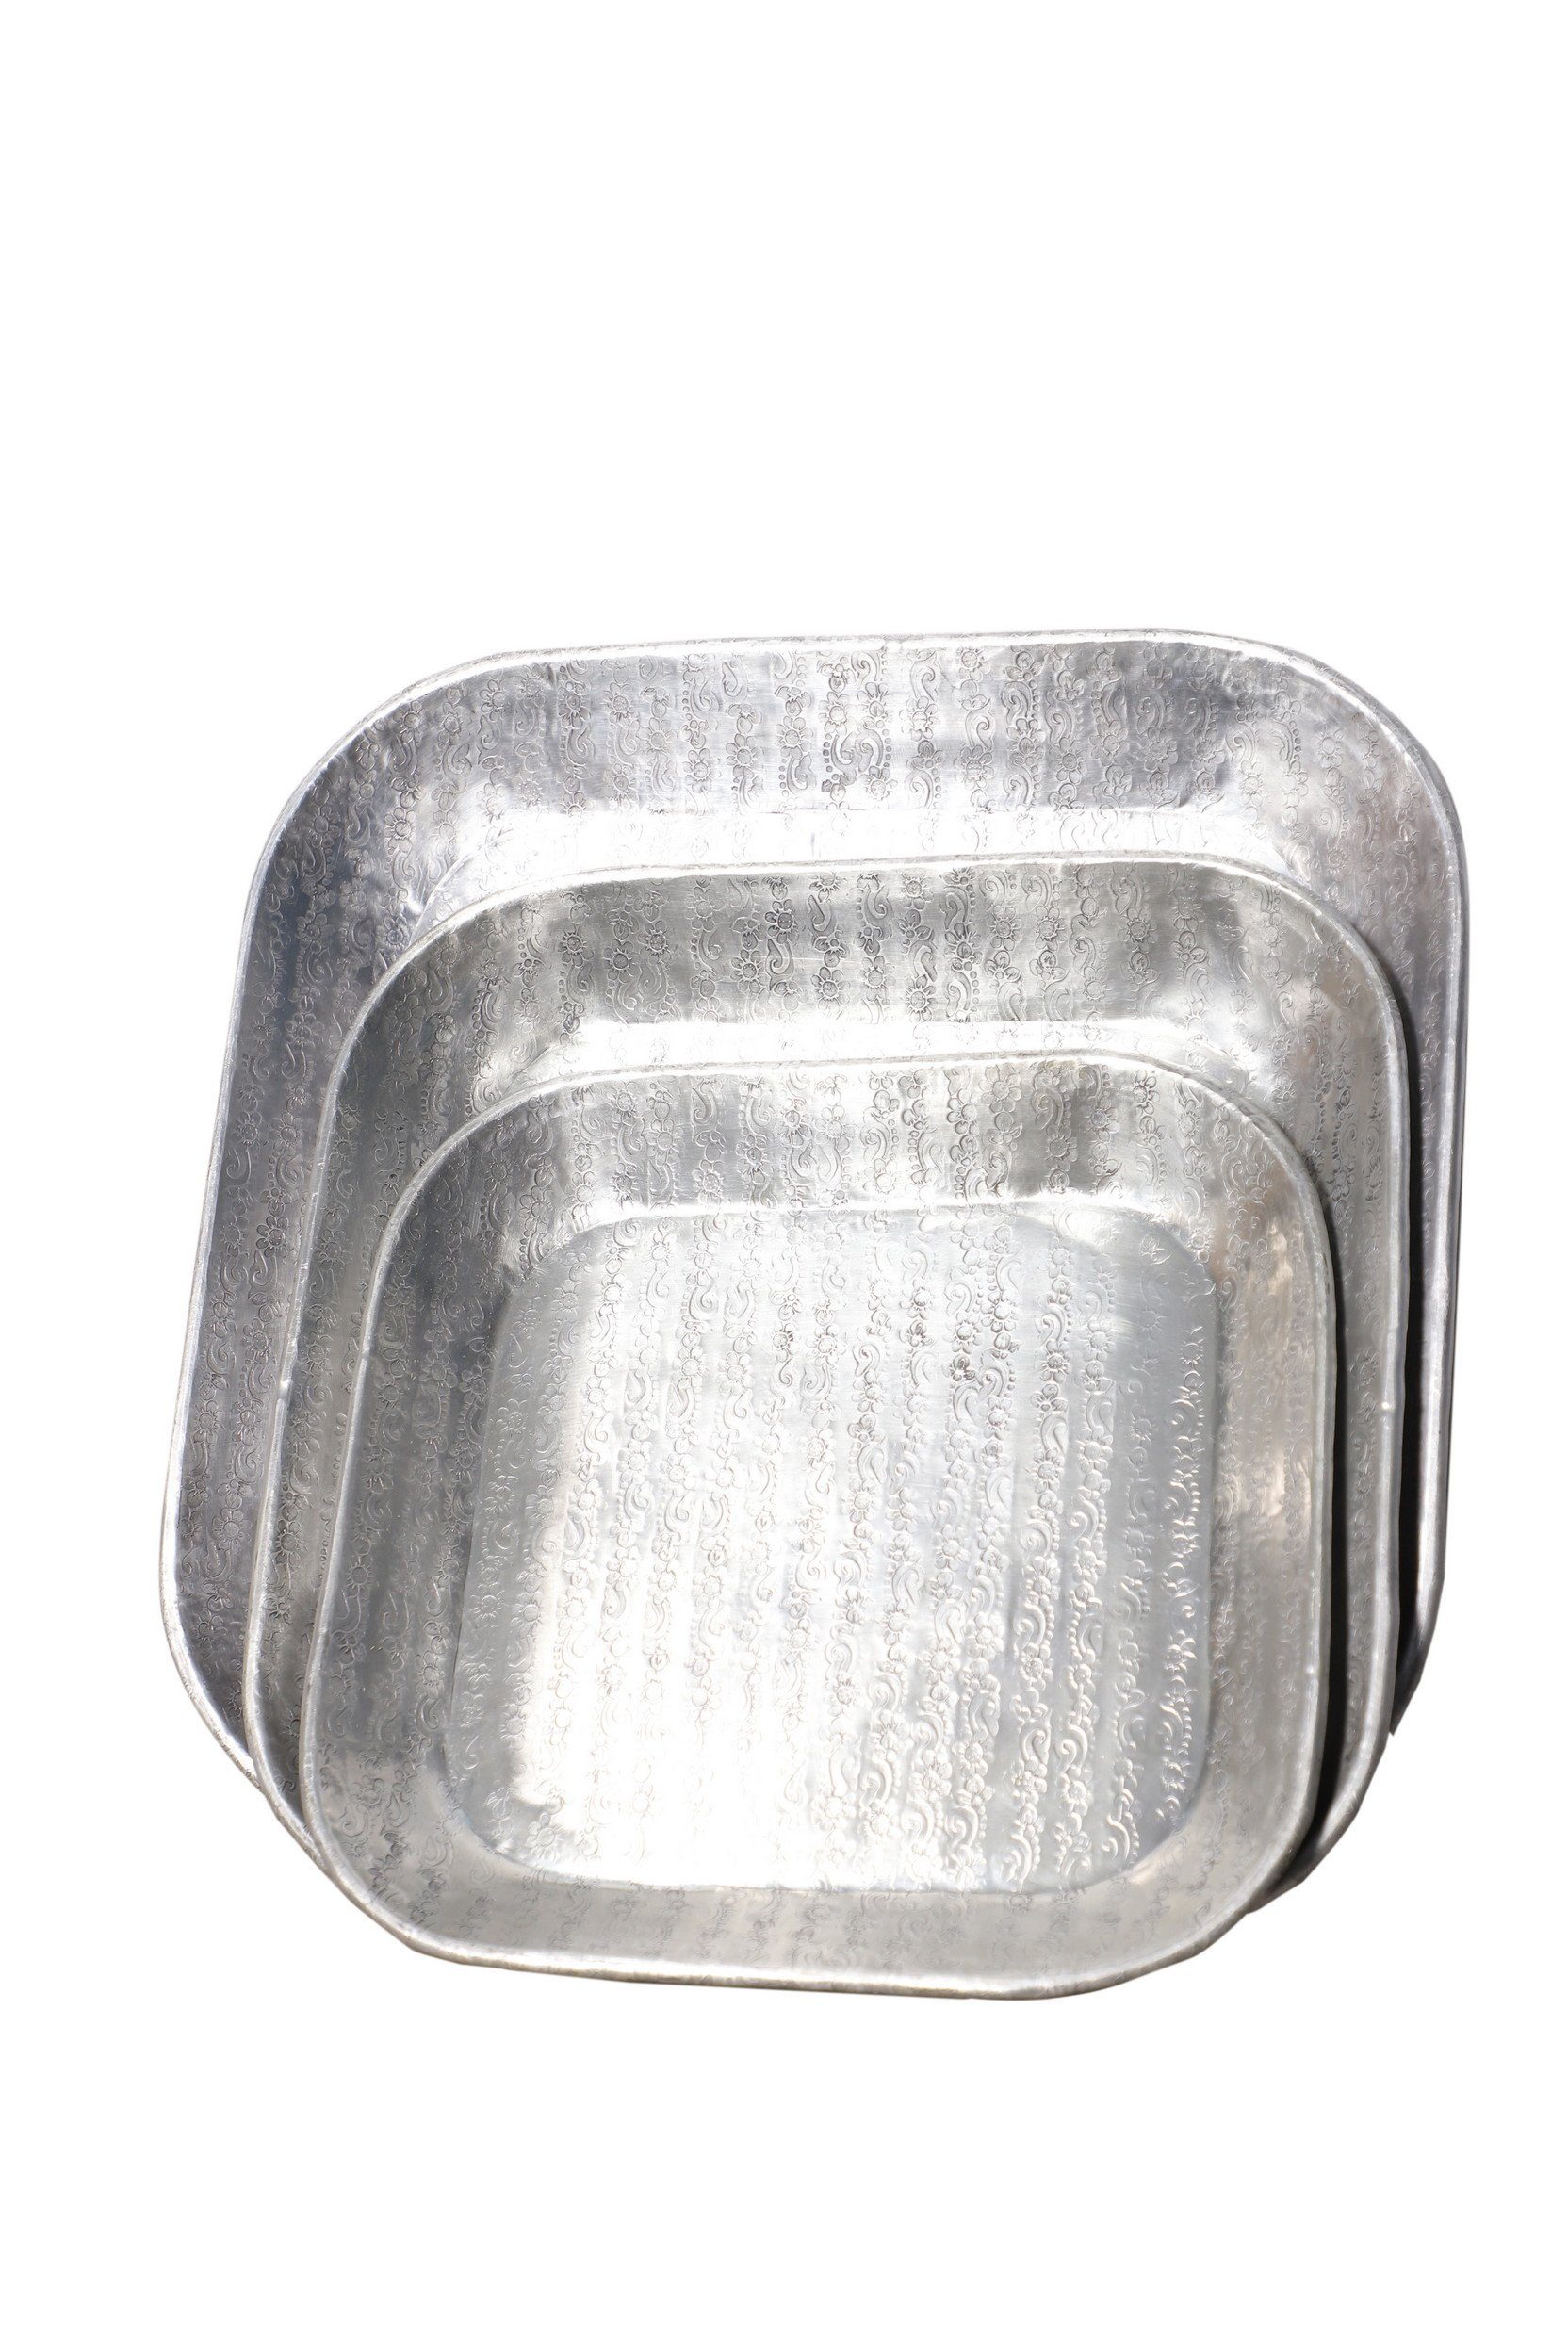 Prisma Aluminium, Moro Casa Orientalisches aus Aluminium Tablett (Set, mit Tablett Deko Optik, Hammerschlag Weihnachten Tablett Serviertablett 3-tlg), Silber Boho